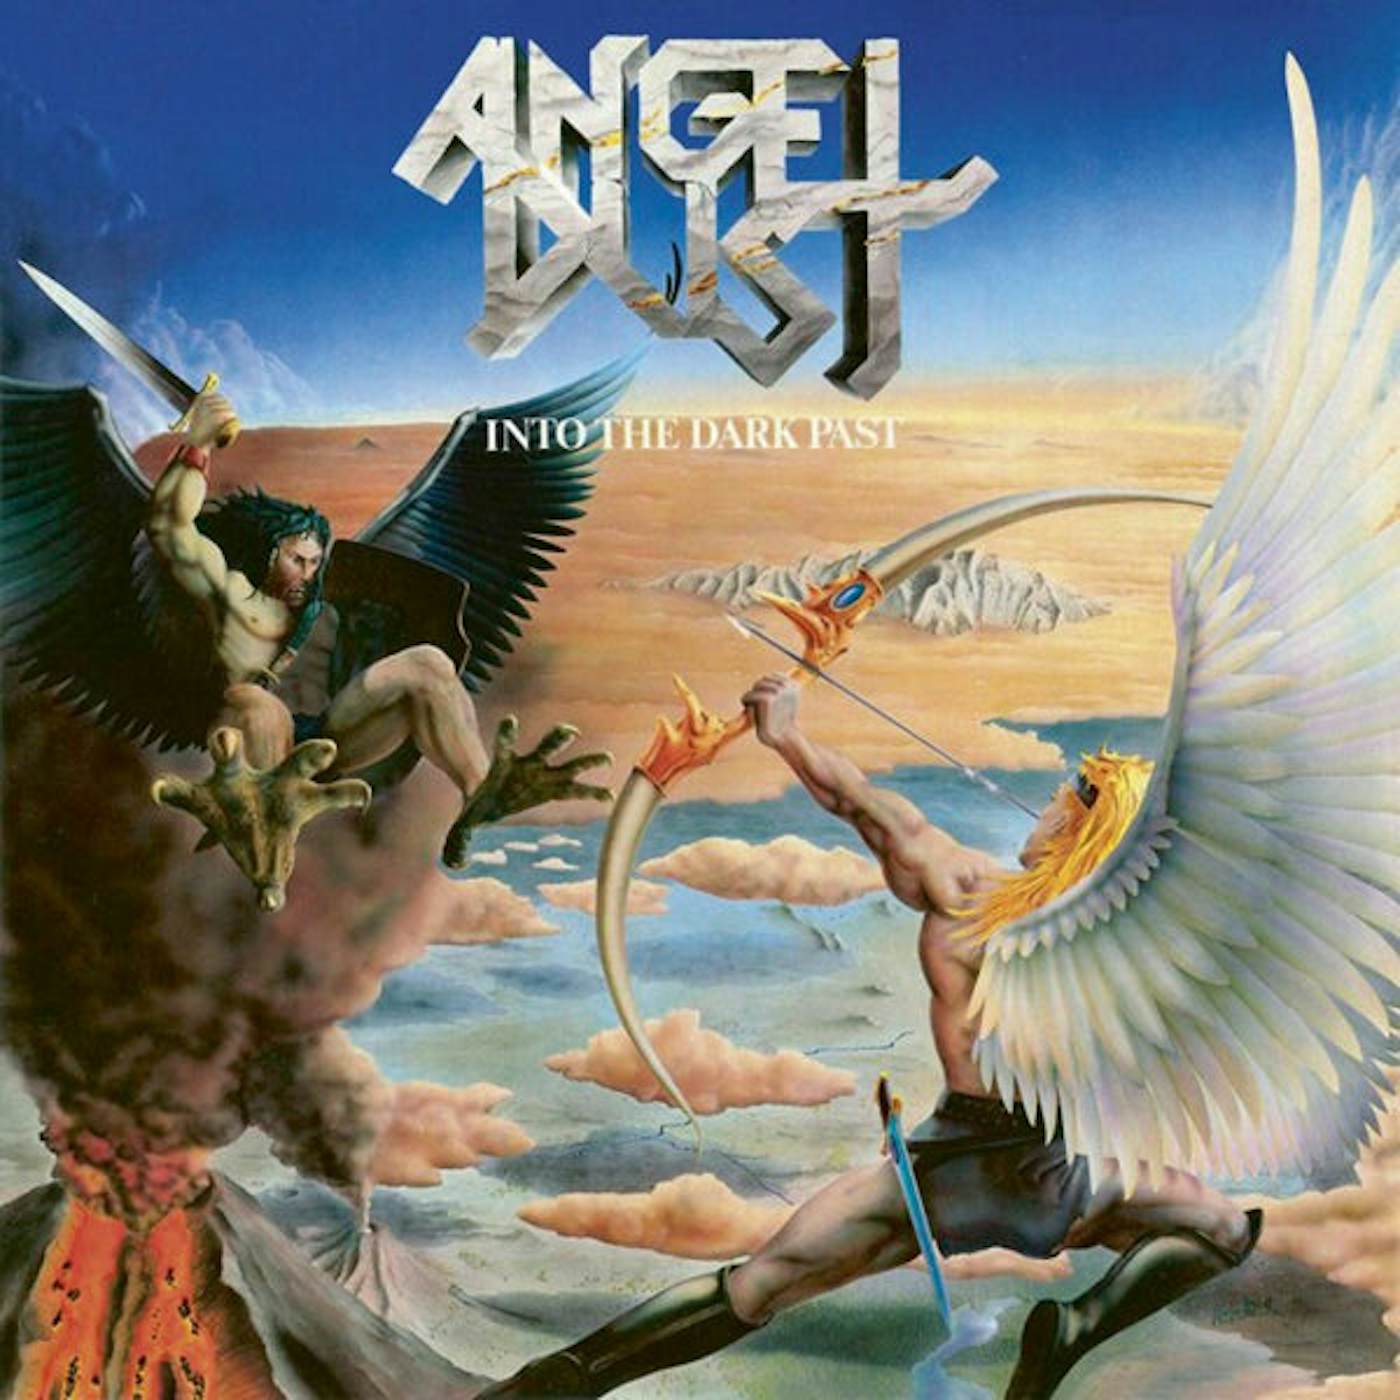 Angel Dust LP - Into The Dark Past (Blue / White / Red Vinyl)